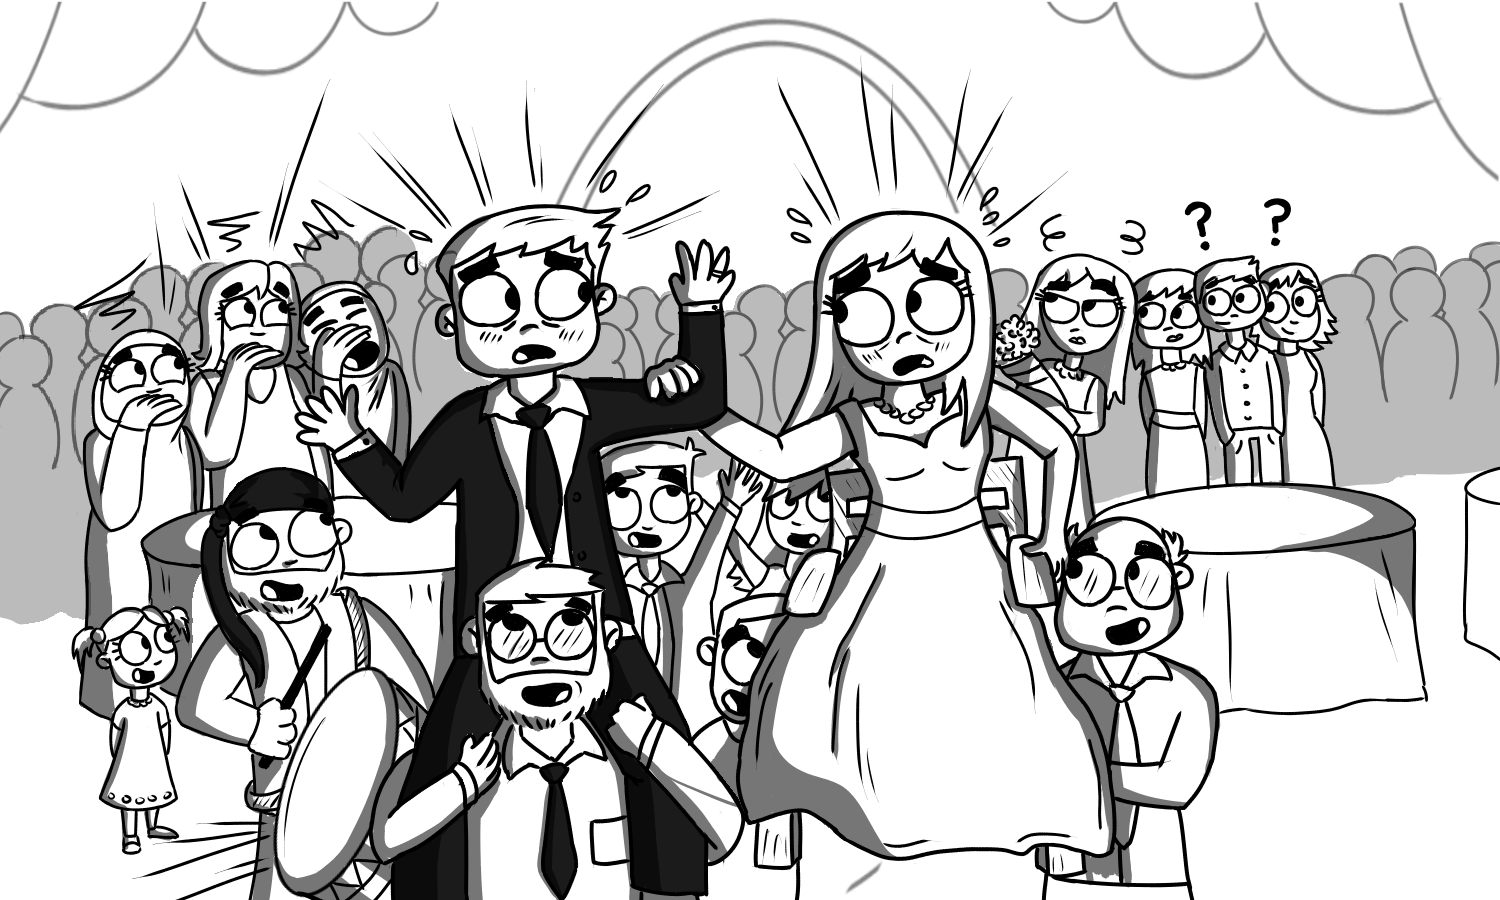 How to plan an Arab-American wedding